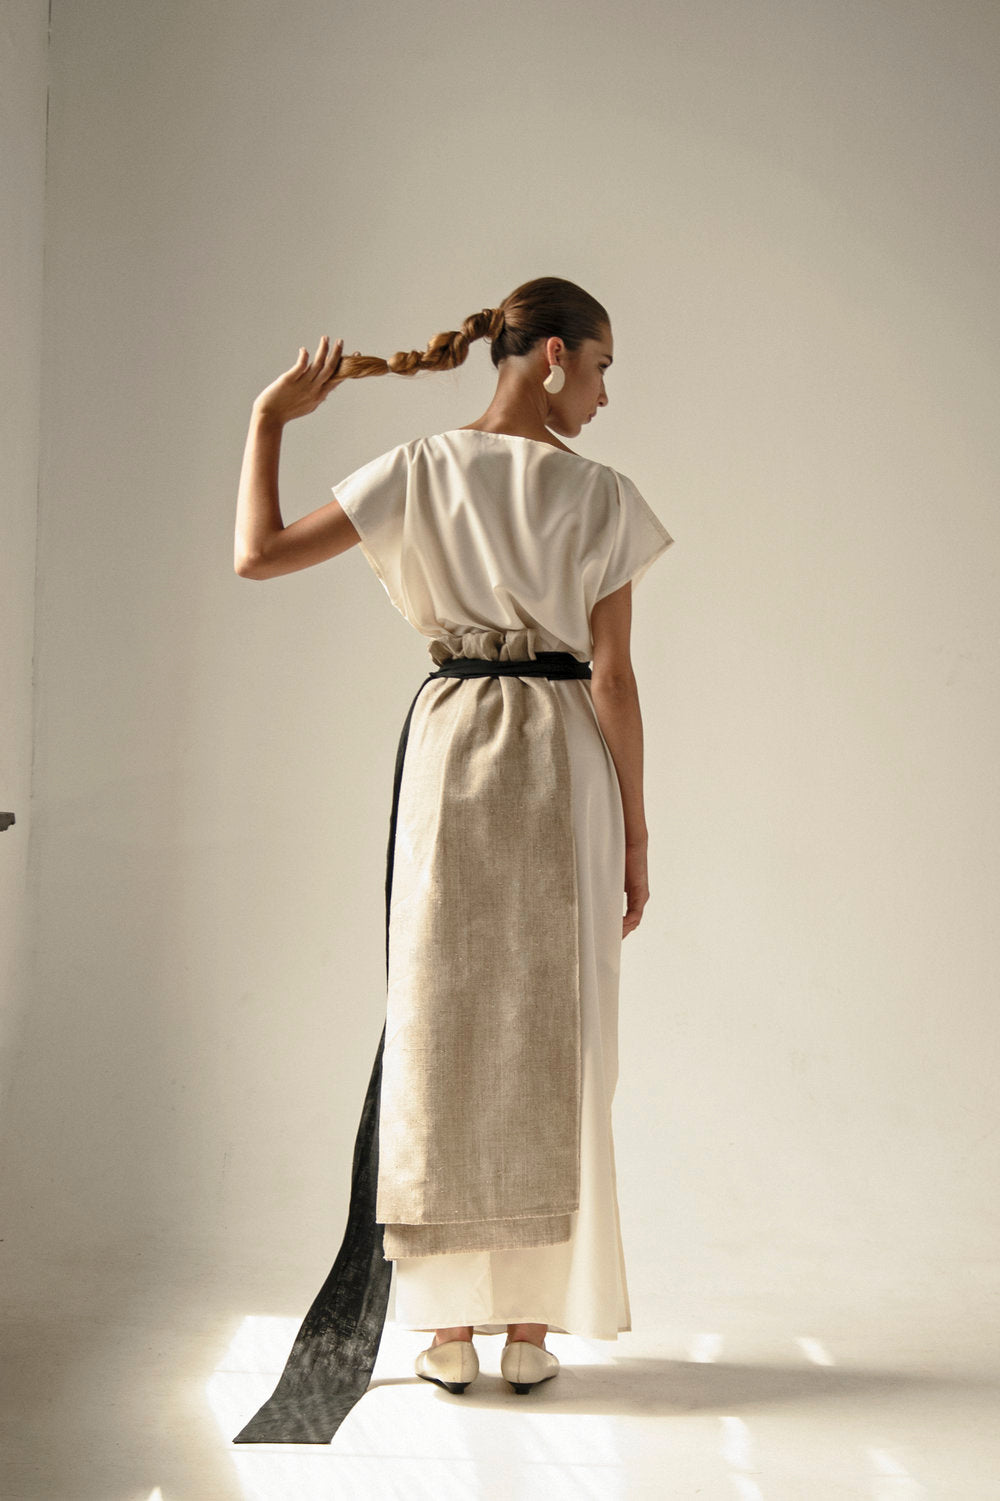 Motanka raw linen dress by KM by Lange